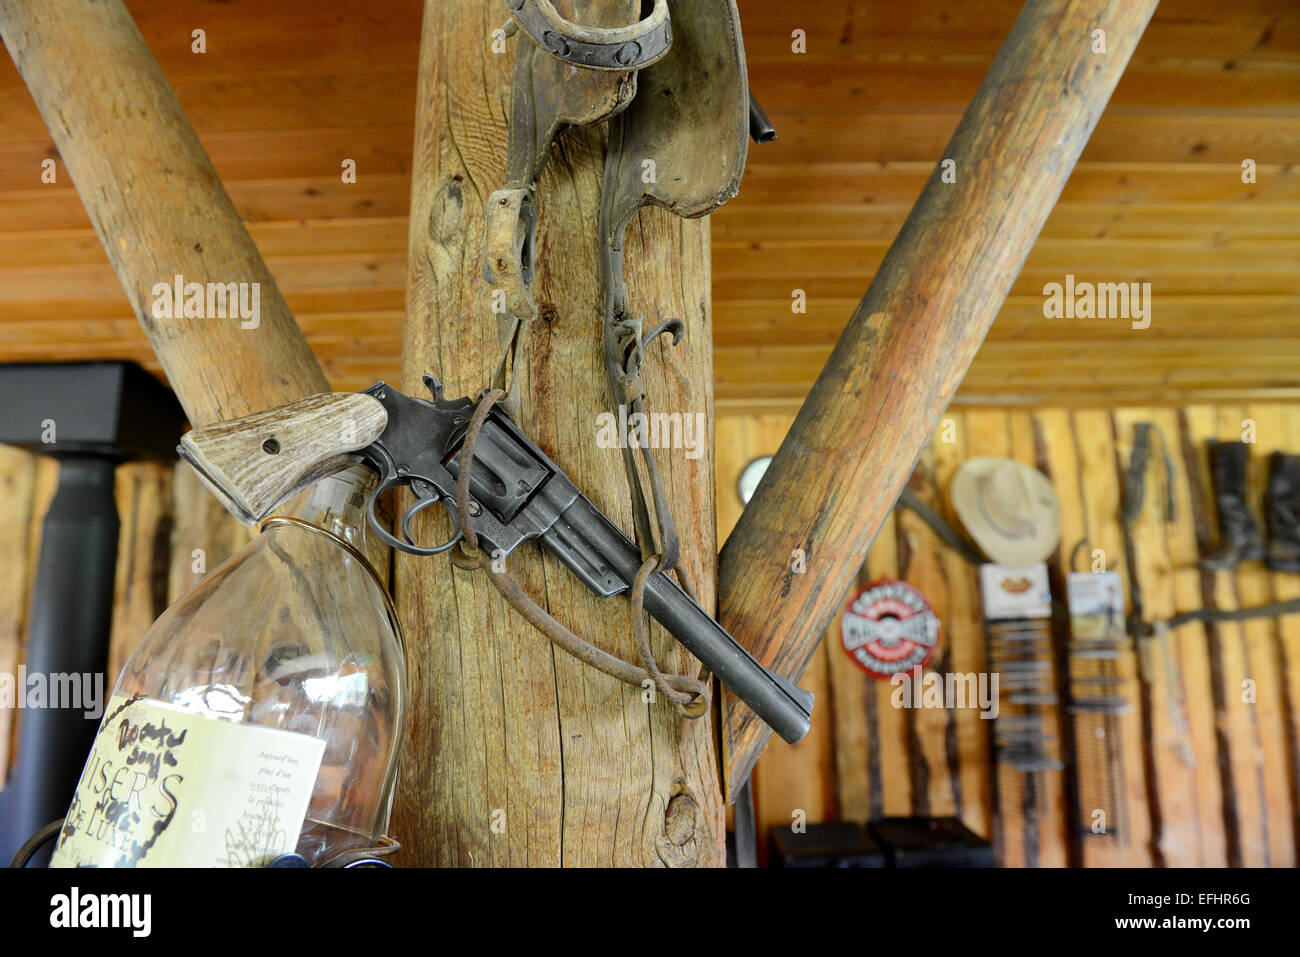 Cowboy gun in a wild west bar Stock Photo